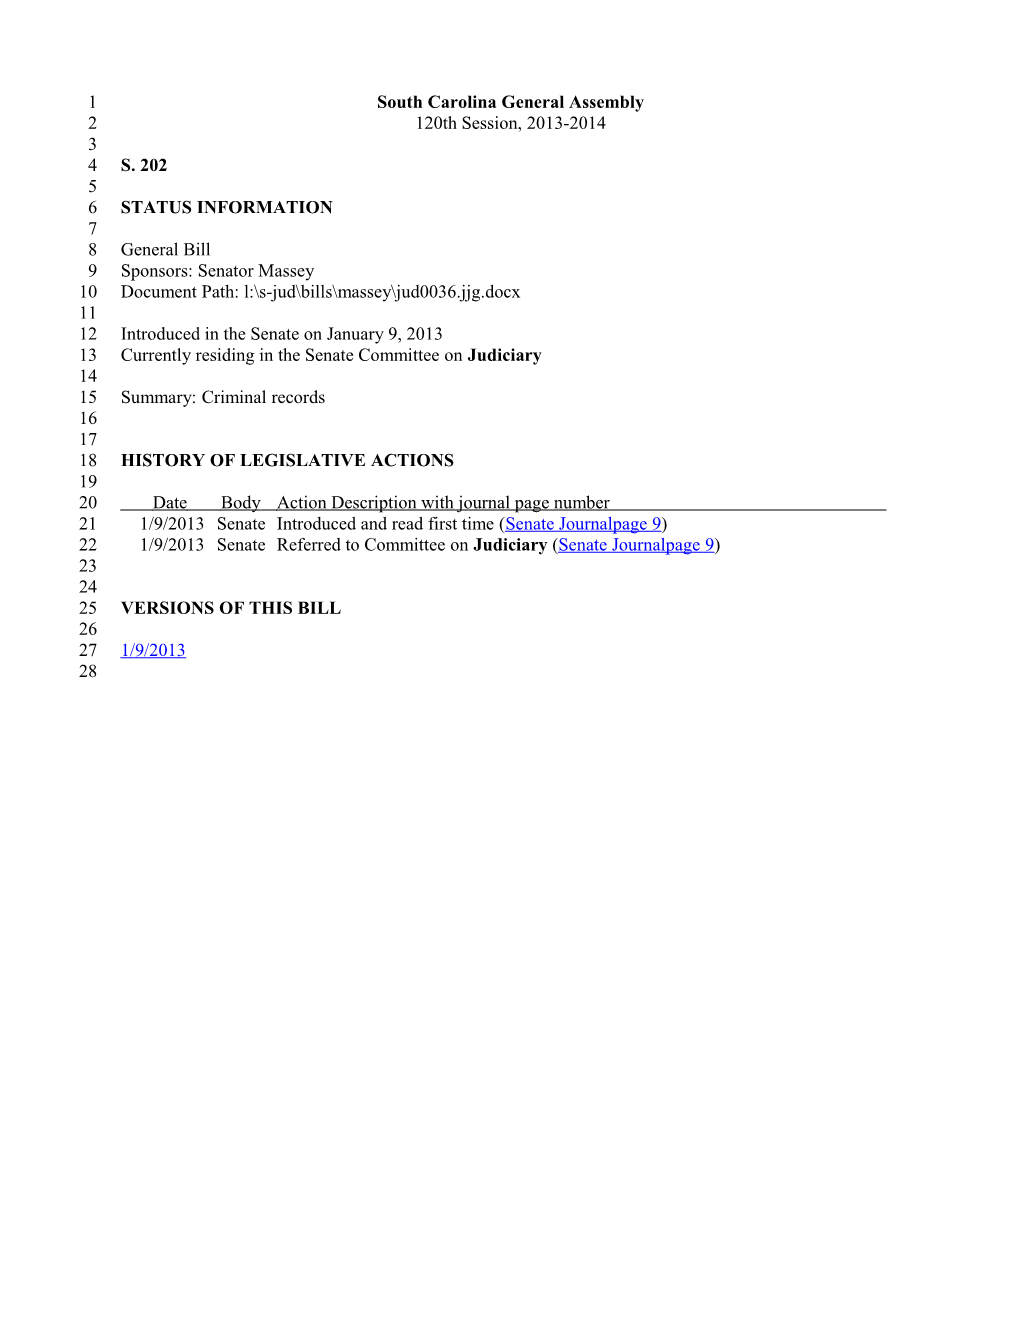 2013-2014 Bill 202: Criminal Records - South Carolina Legislature Online